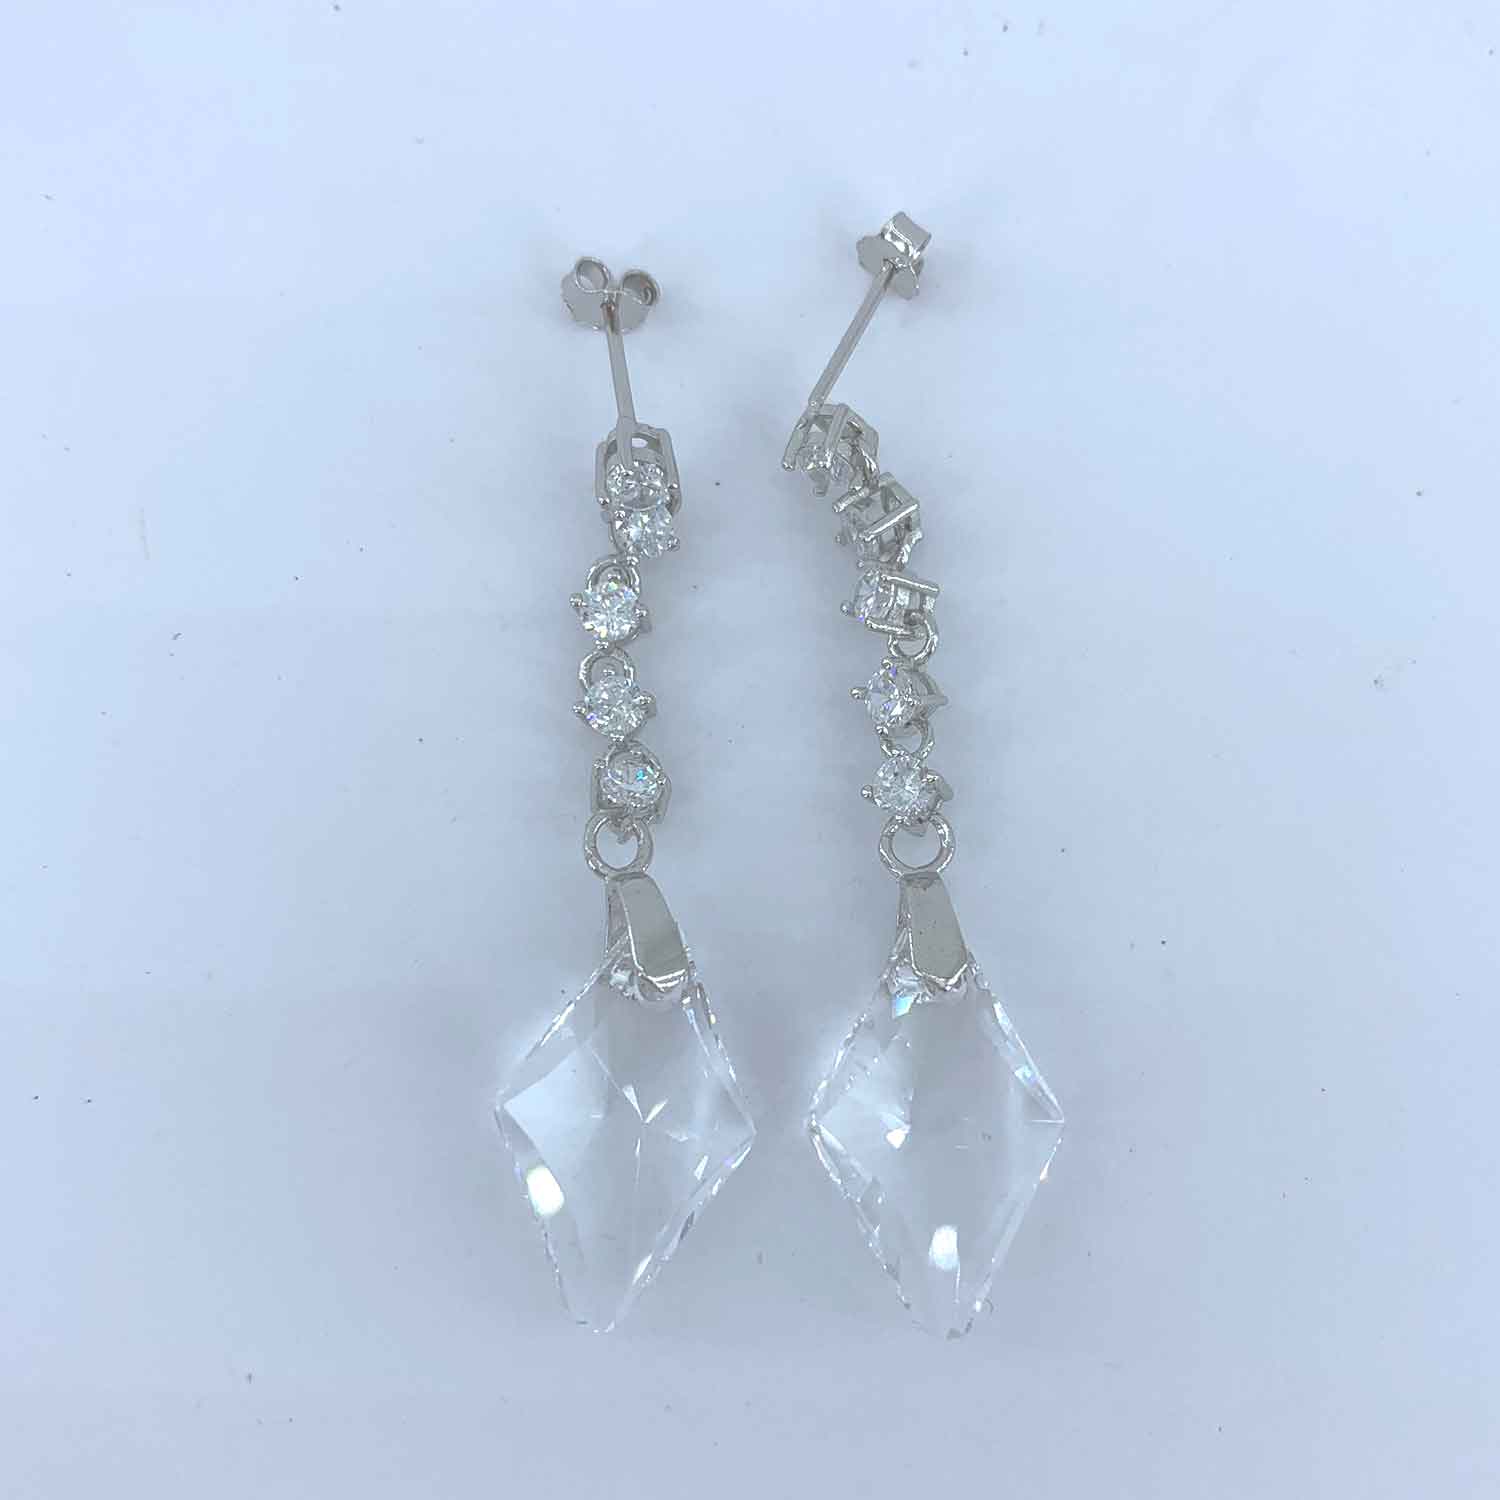 925 Sterling Silver Crystal Earrings  "Sofia" (crystal)